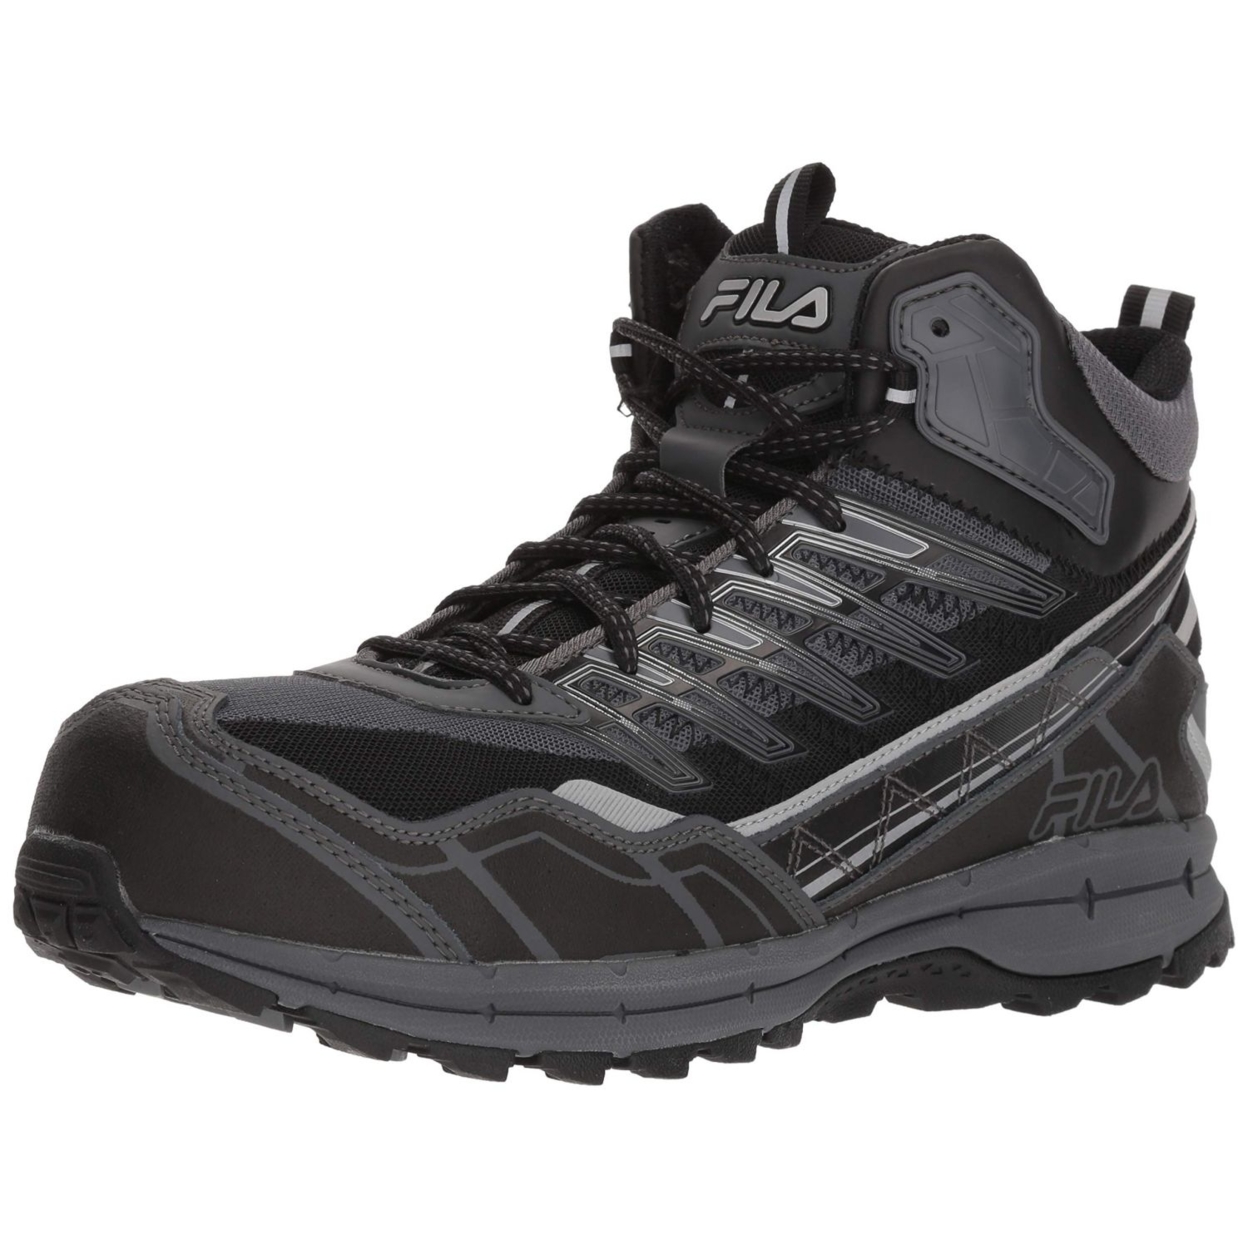 Fila Men's Hail Storm 3 Mid Composite Toe Trail Work Shoes Ct CSRK/BLK/MSIL - CSRK/BLK/MSIL, 8